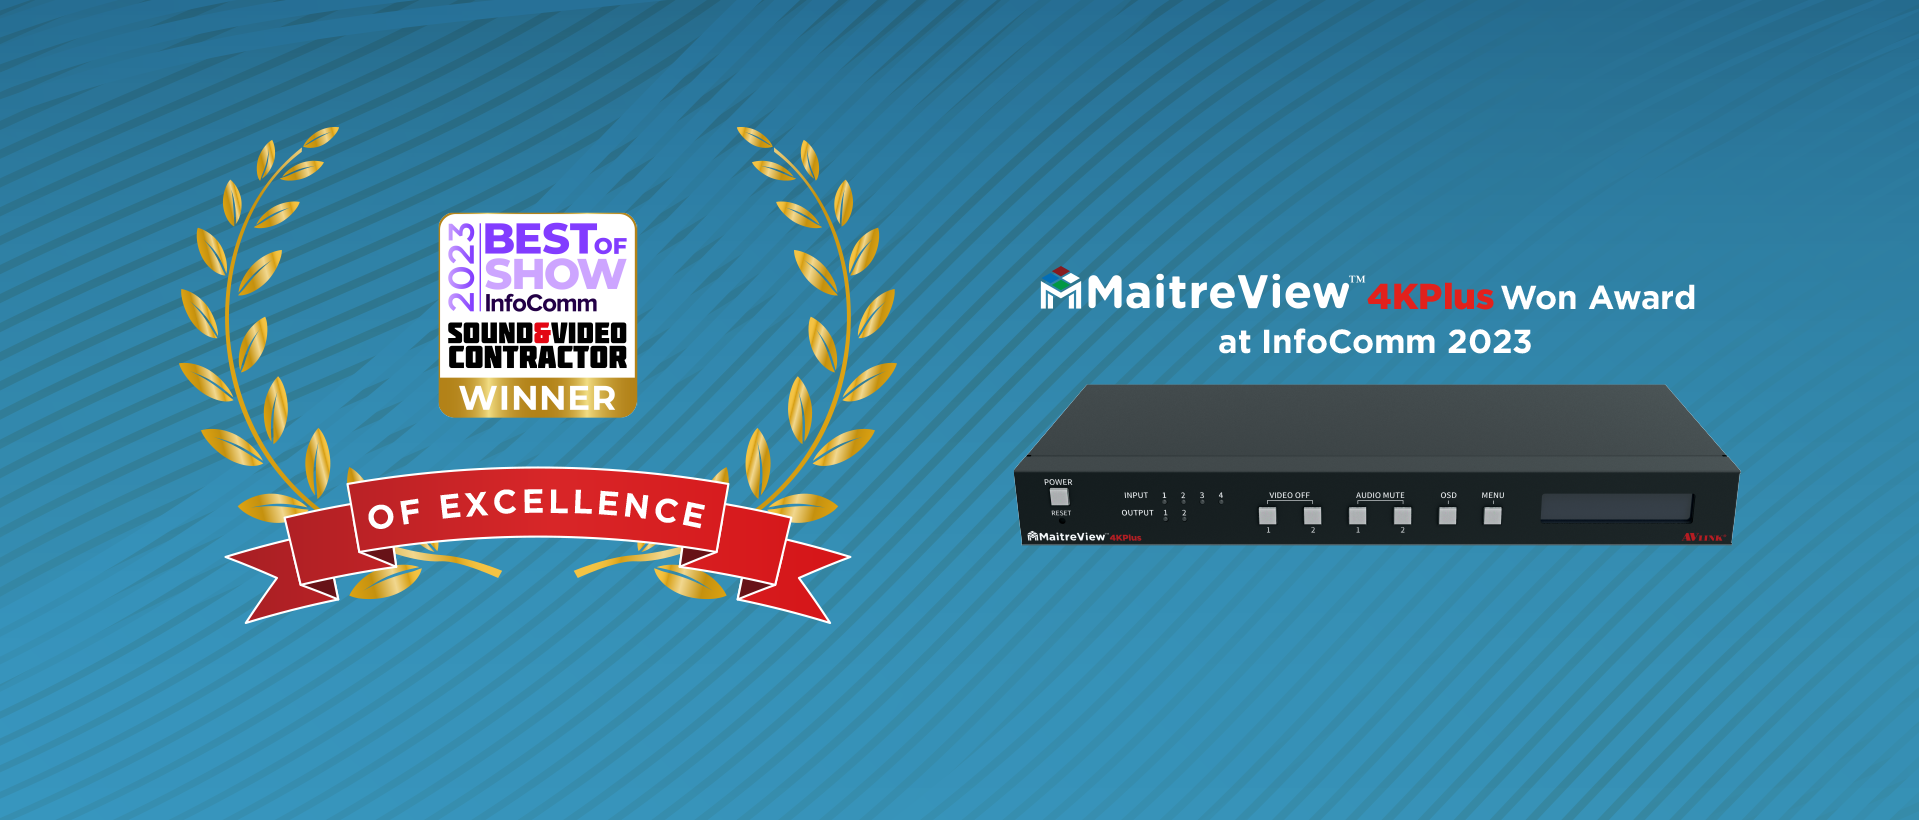 The MaitreView™ 4KPlus Won Award at InfoComm 2023